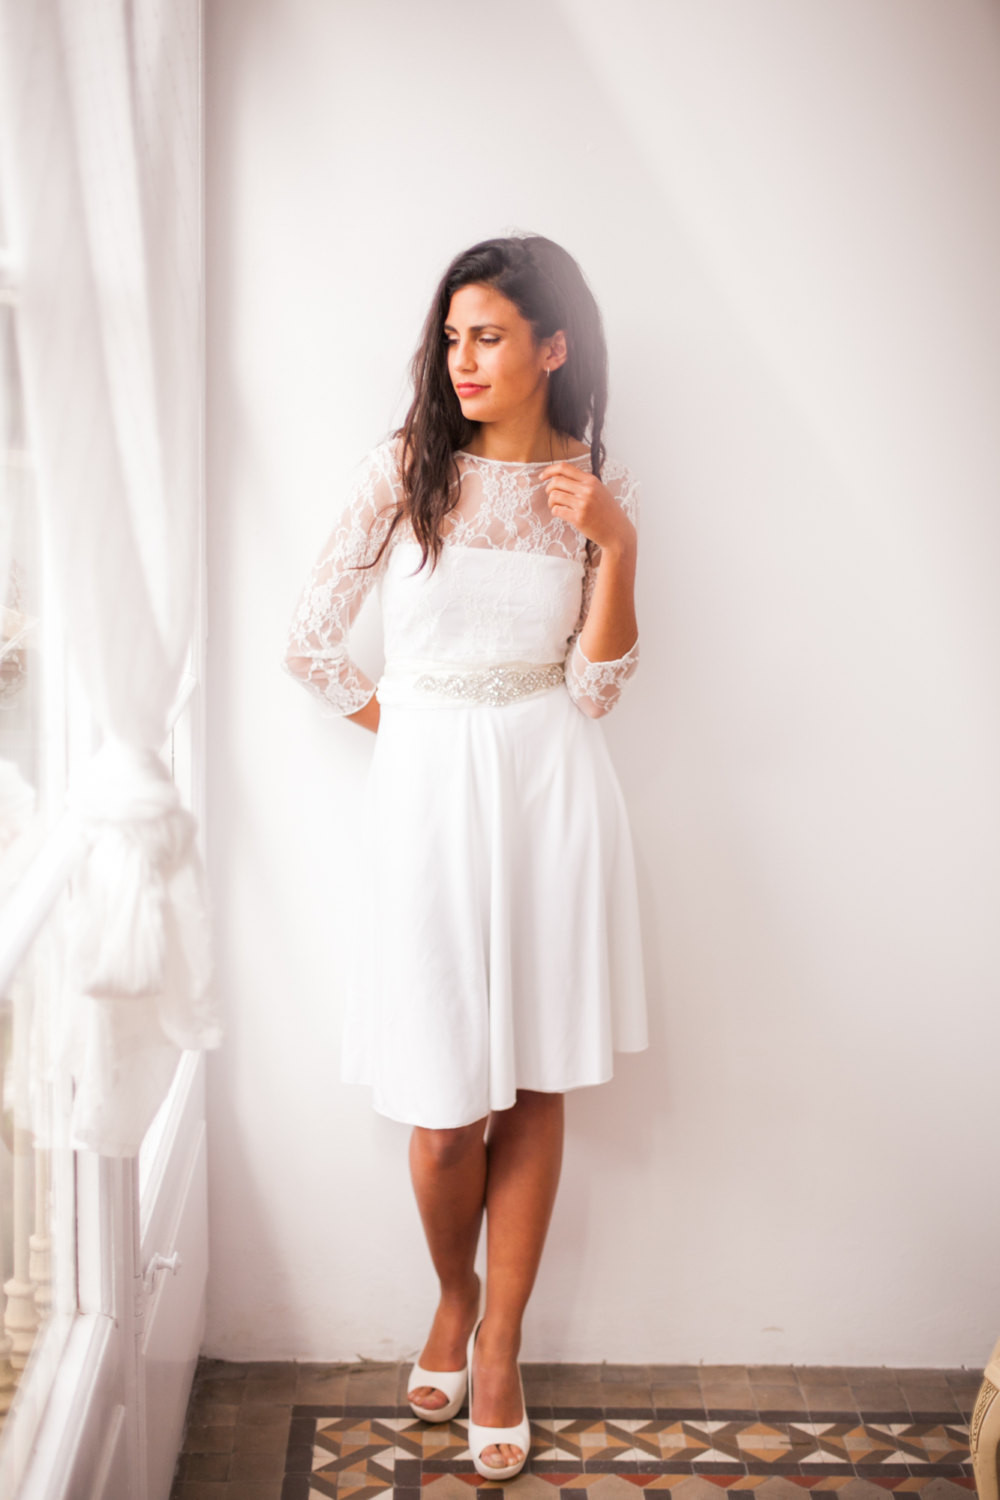 Wedding Reception Dress For Bride
 Short wedding dress with sleeves lace wedding reception